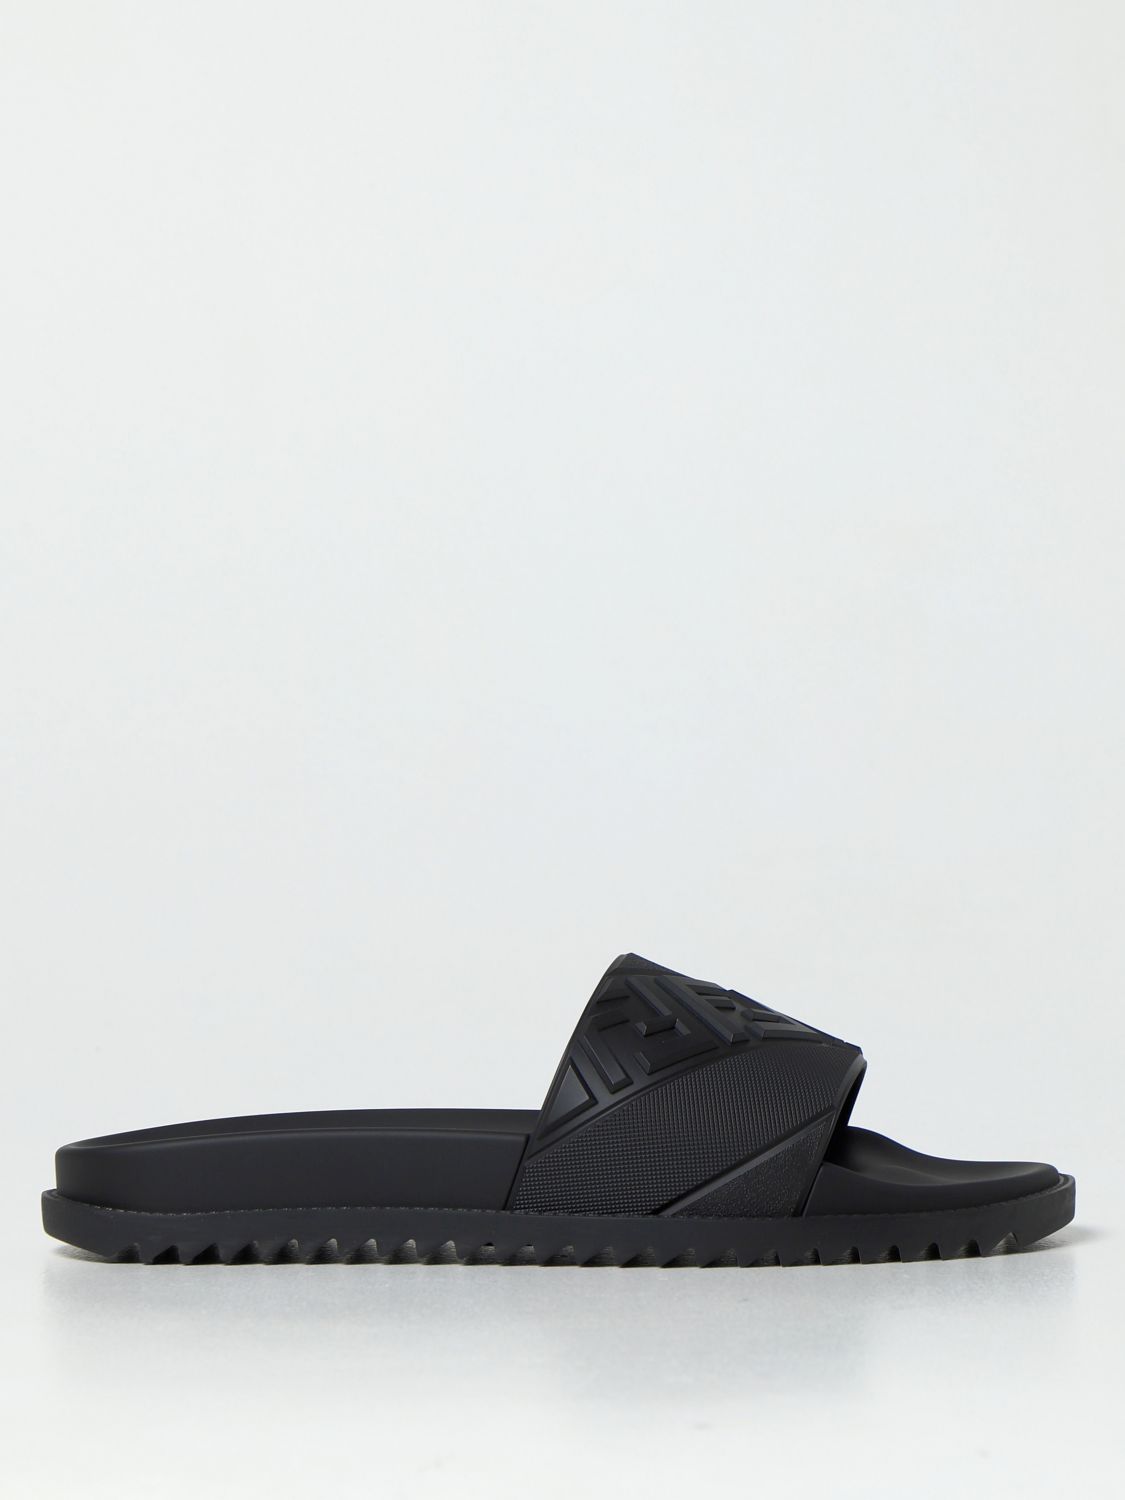 FENDI: rubber sandals with embossed FF logo - Black | Fendi sandals ...